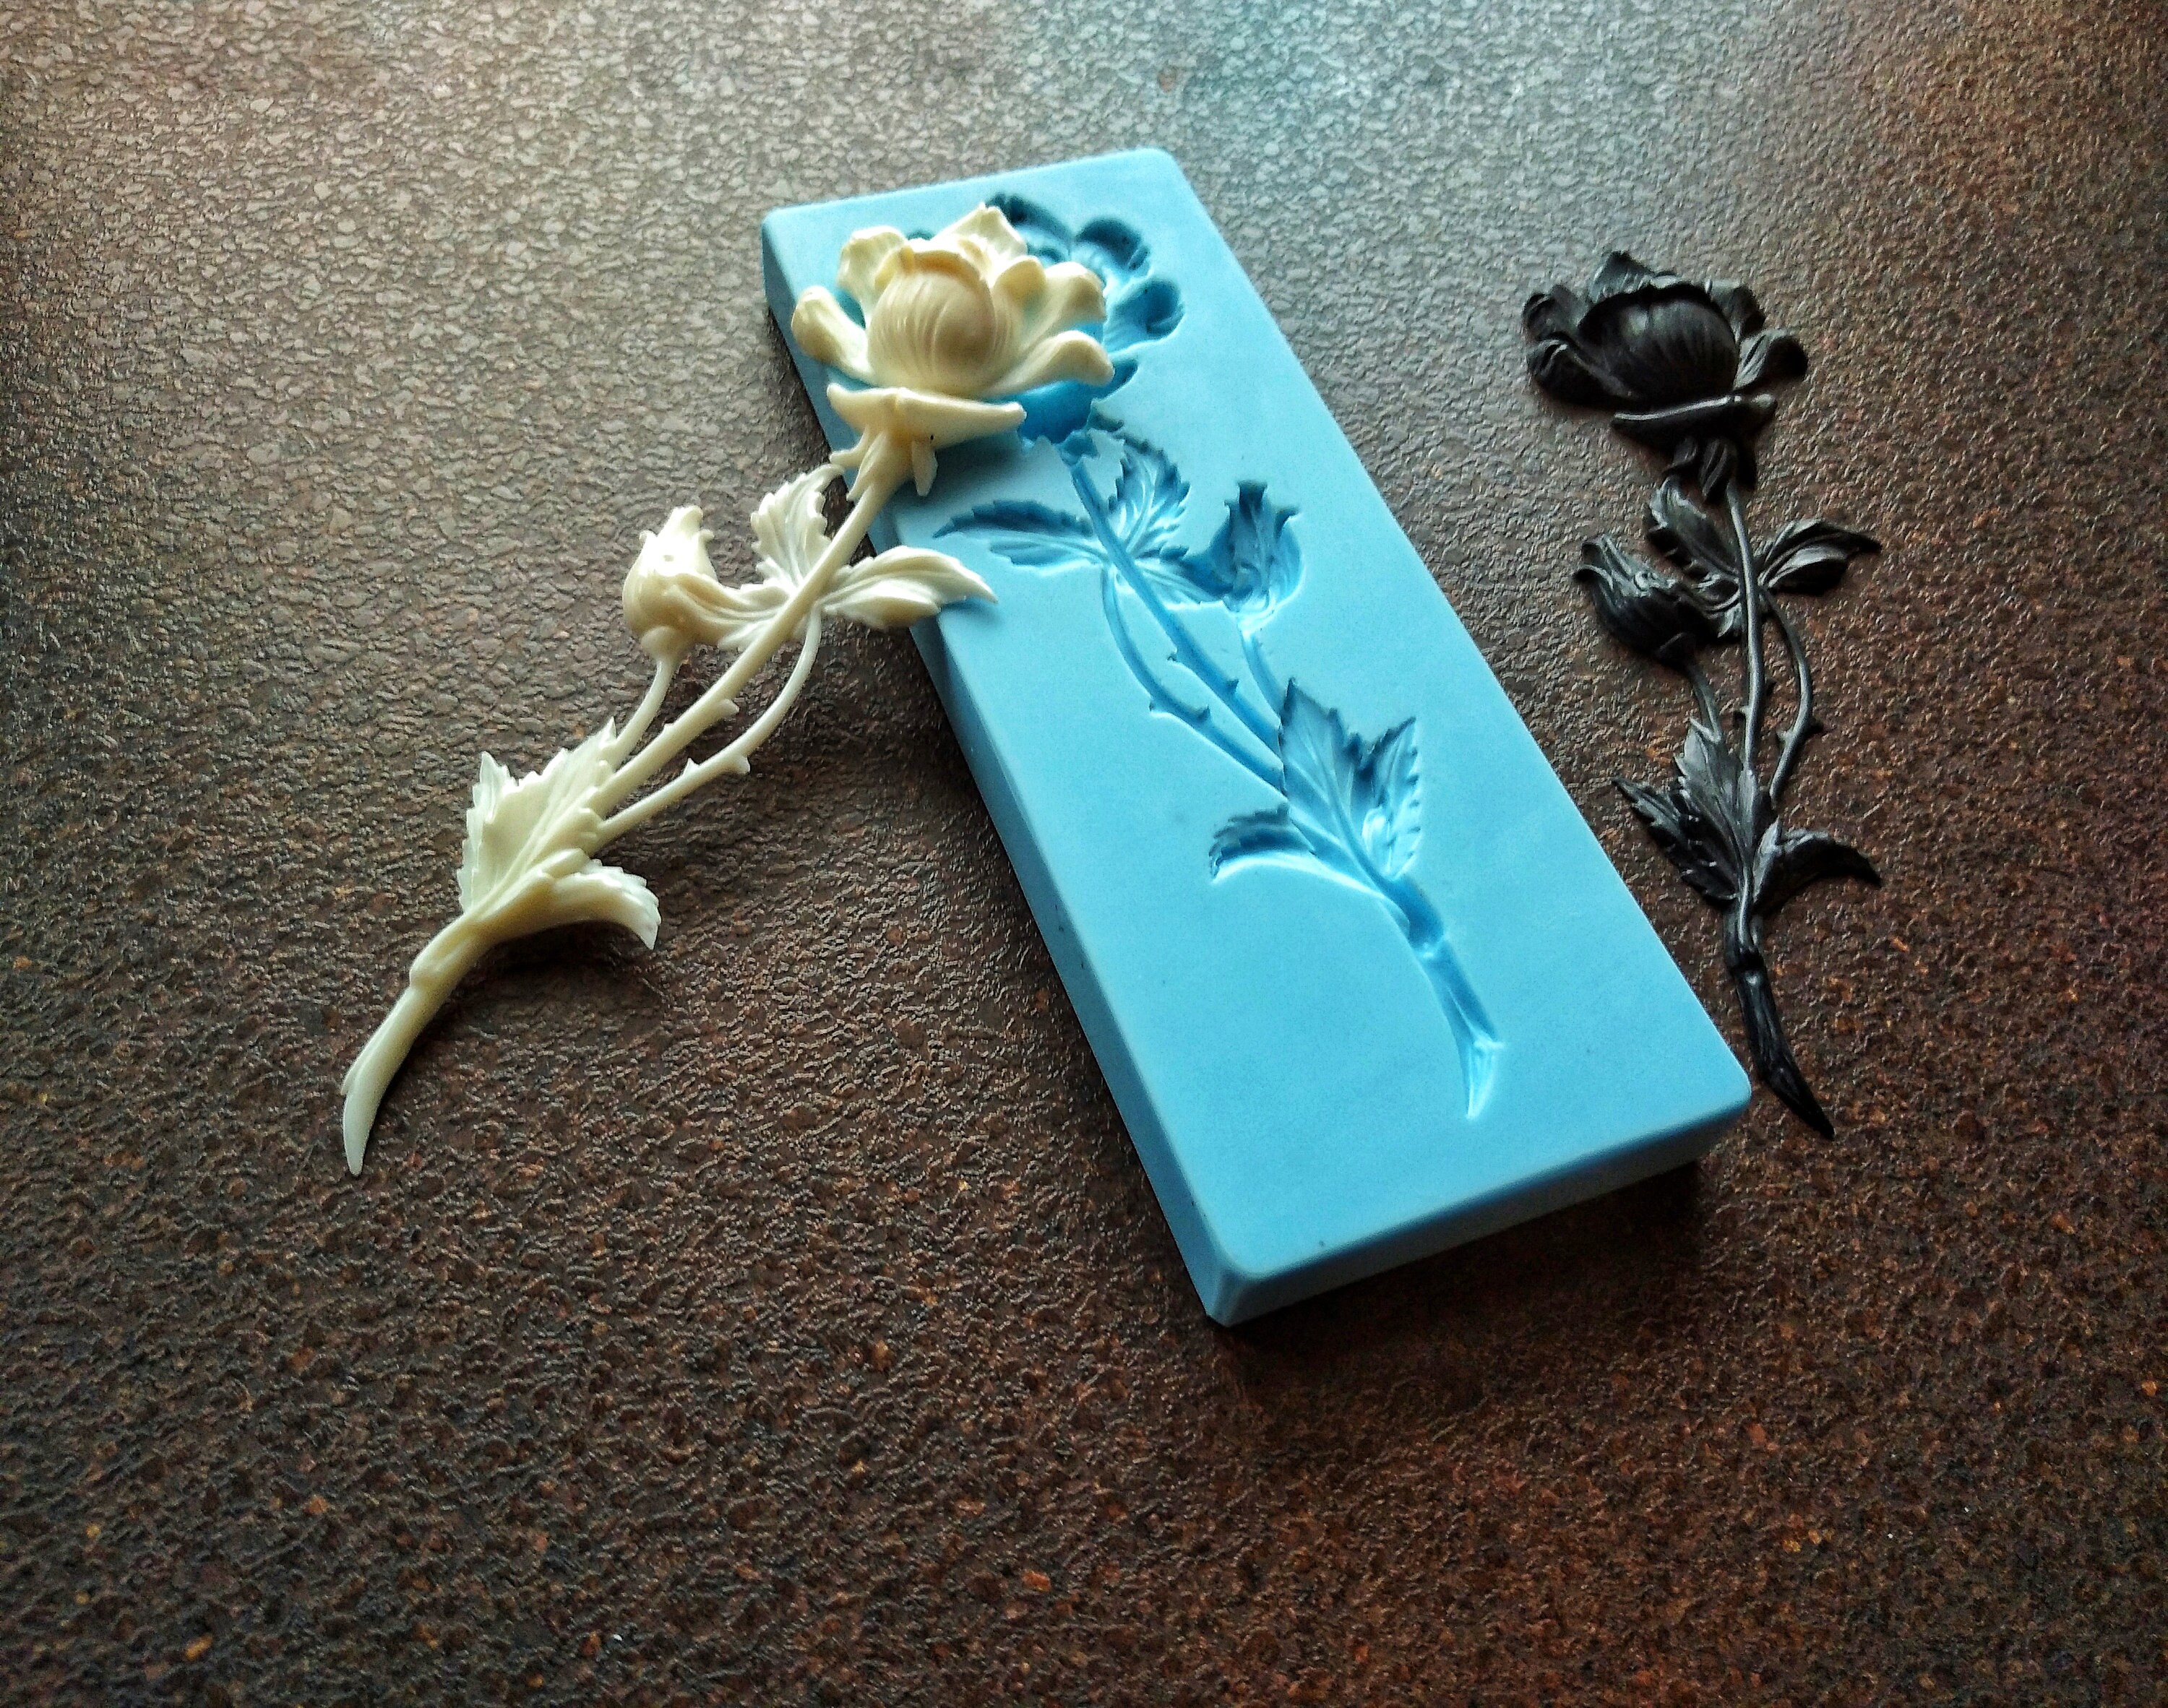 Decor Moulds® – Magnolia Flower – 1 pc, 5″x8″x8mm – Re·Design with Prima®